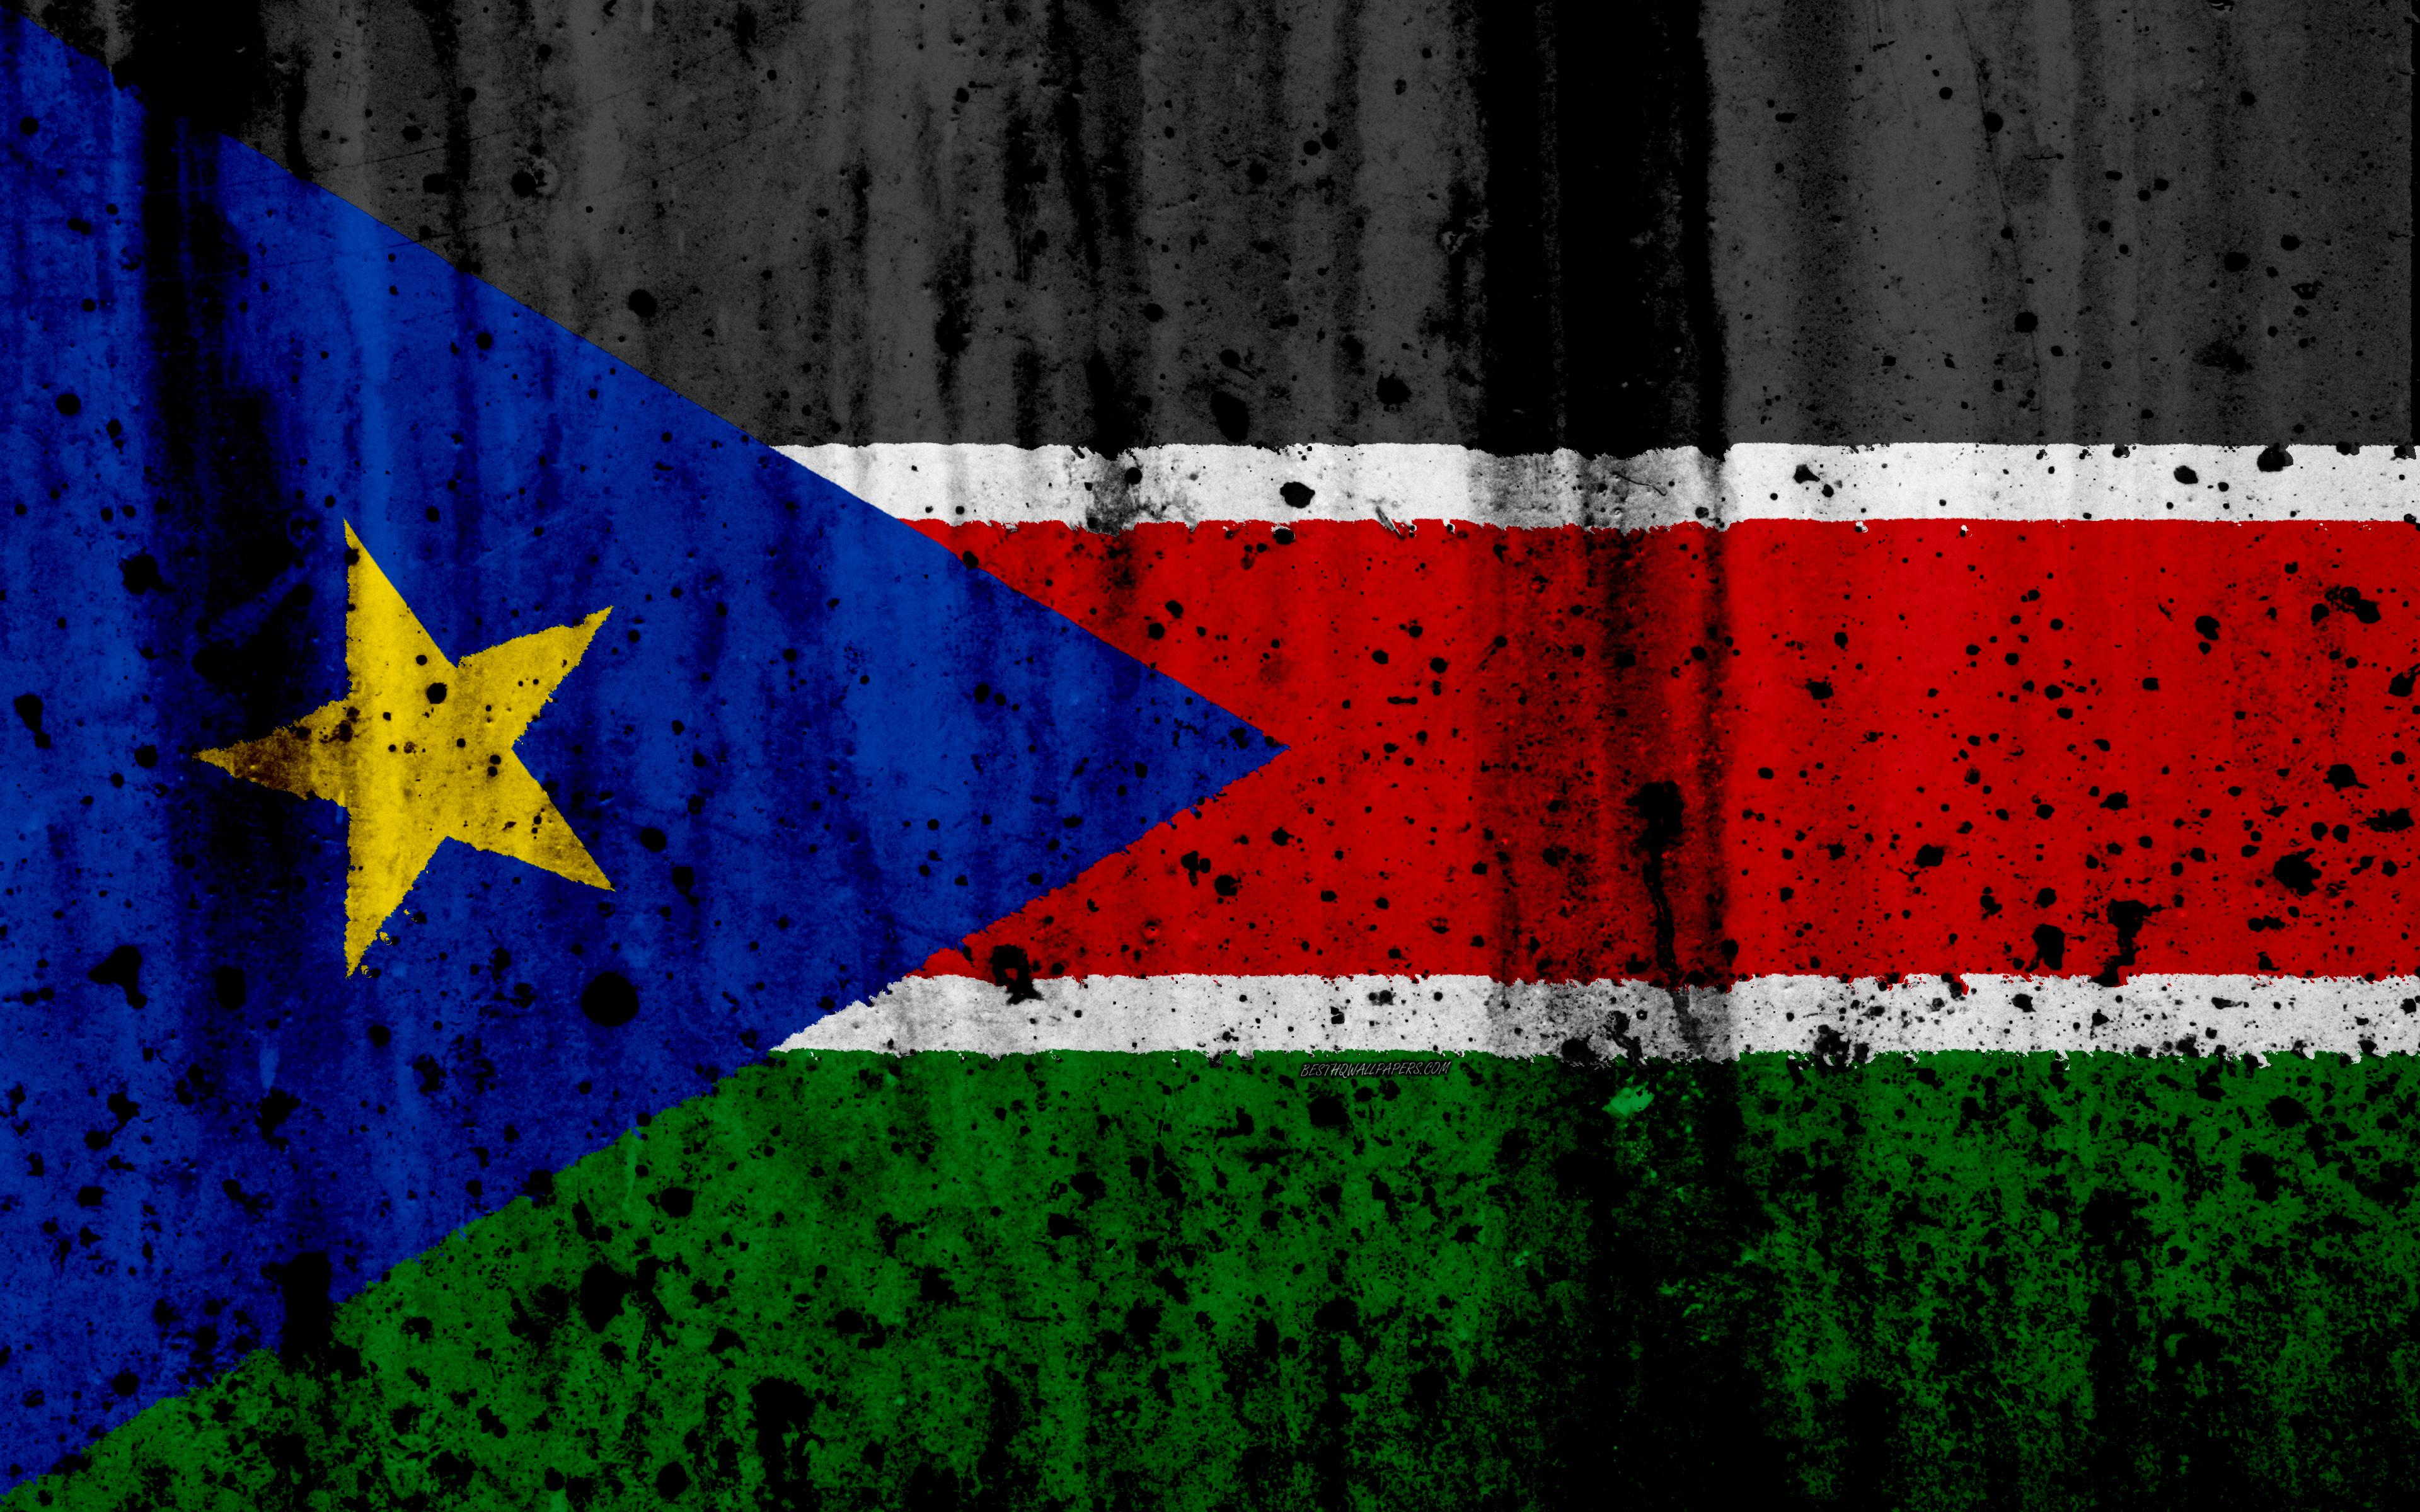 Download wallpaper South Sudan flag, 4k, grunge, flag of South